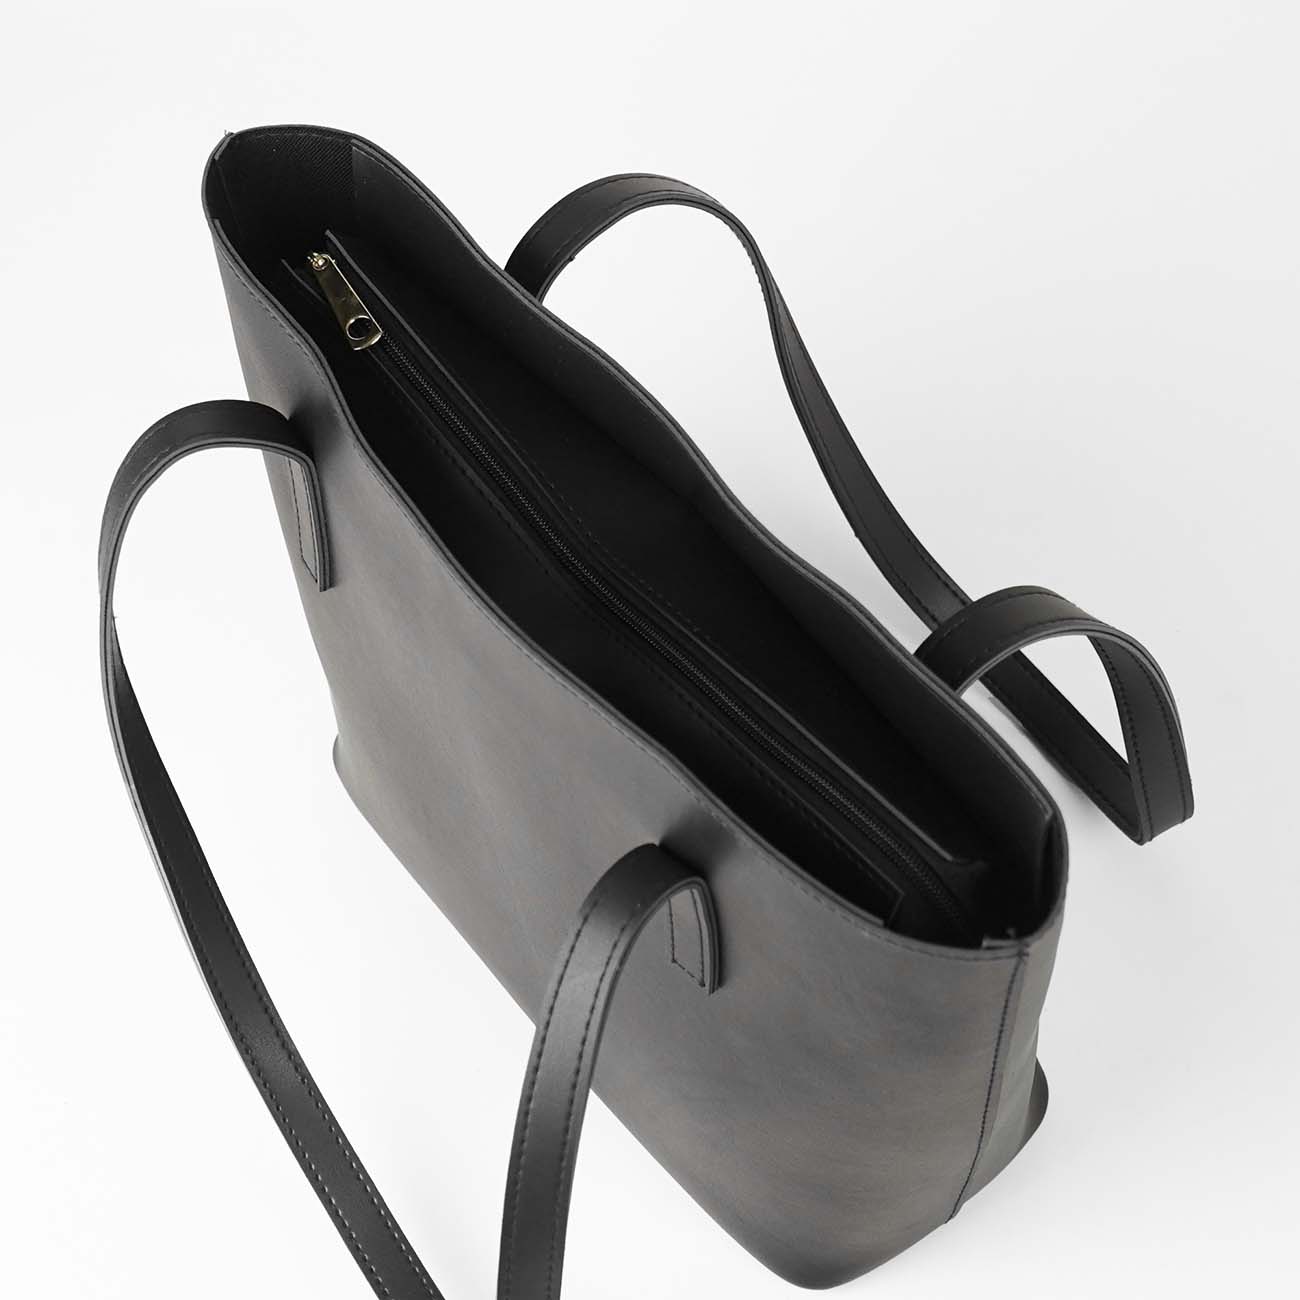 Carry tote set of 2 bag Black